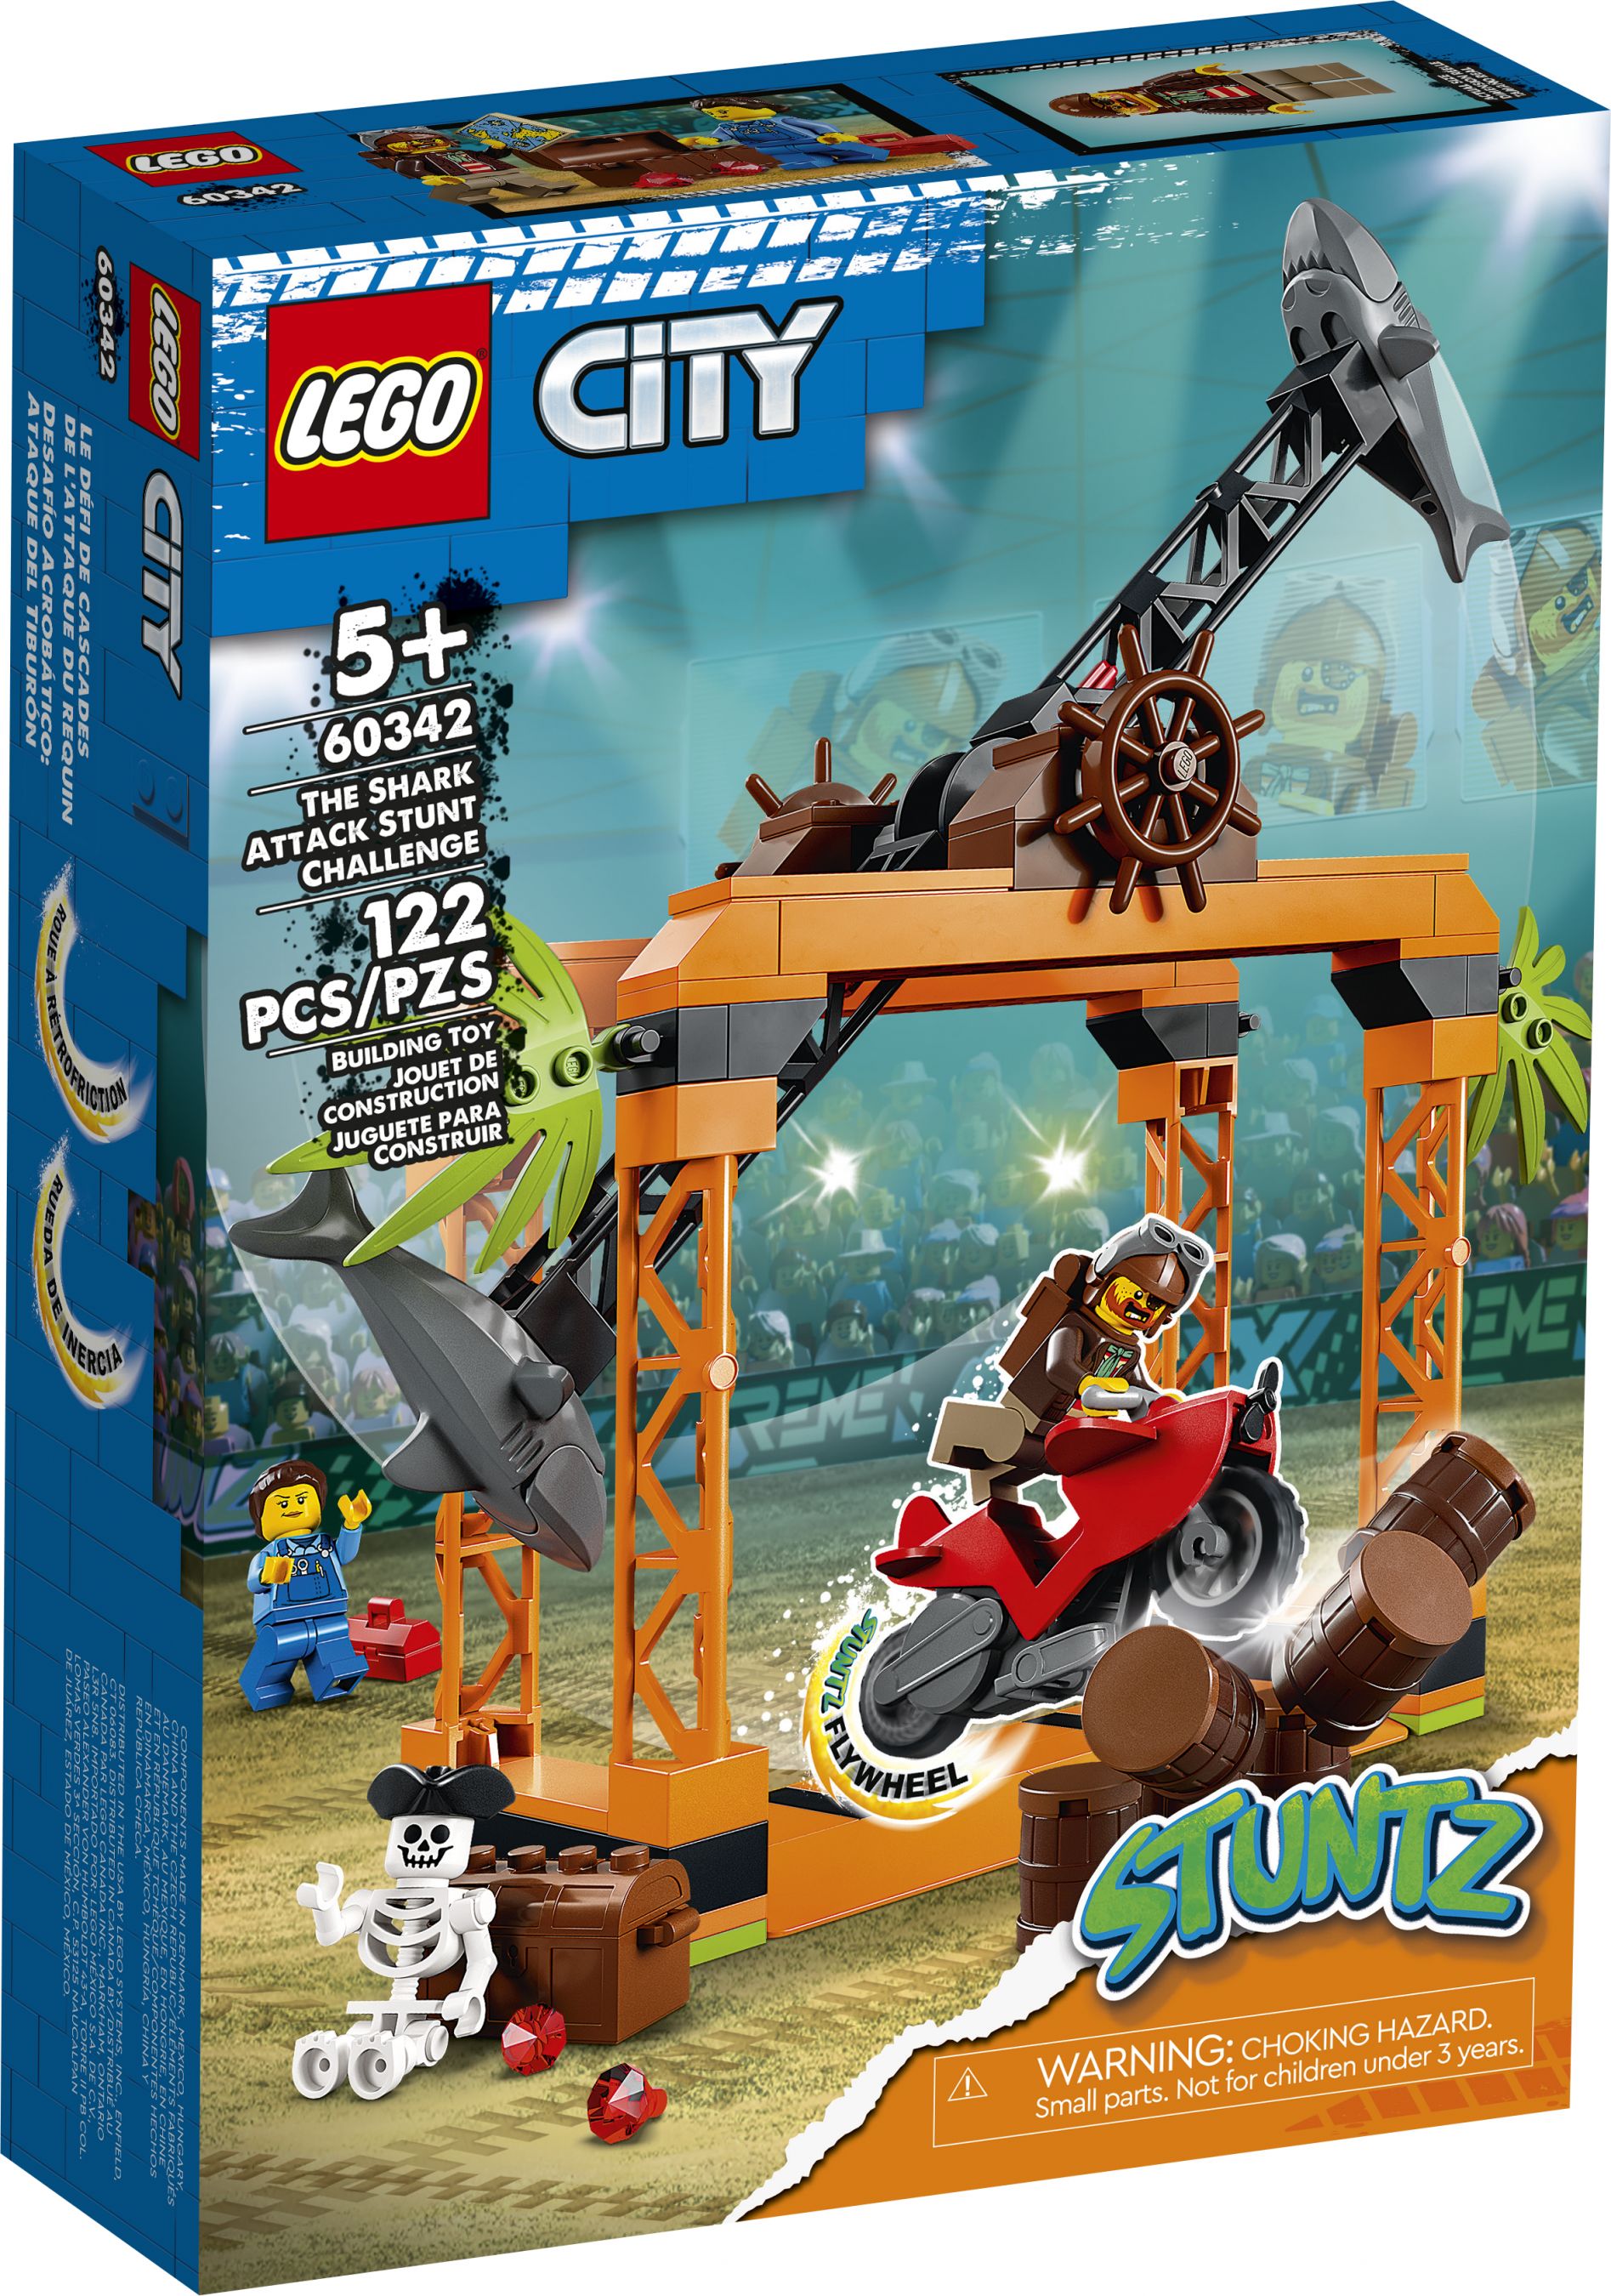 LEGO City 60342 Haiangriff-Stuntchallenge LEGO_60342_Box1_v39.jpg